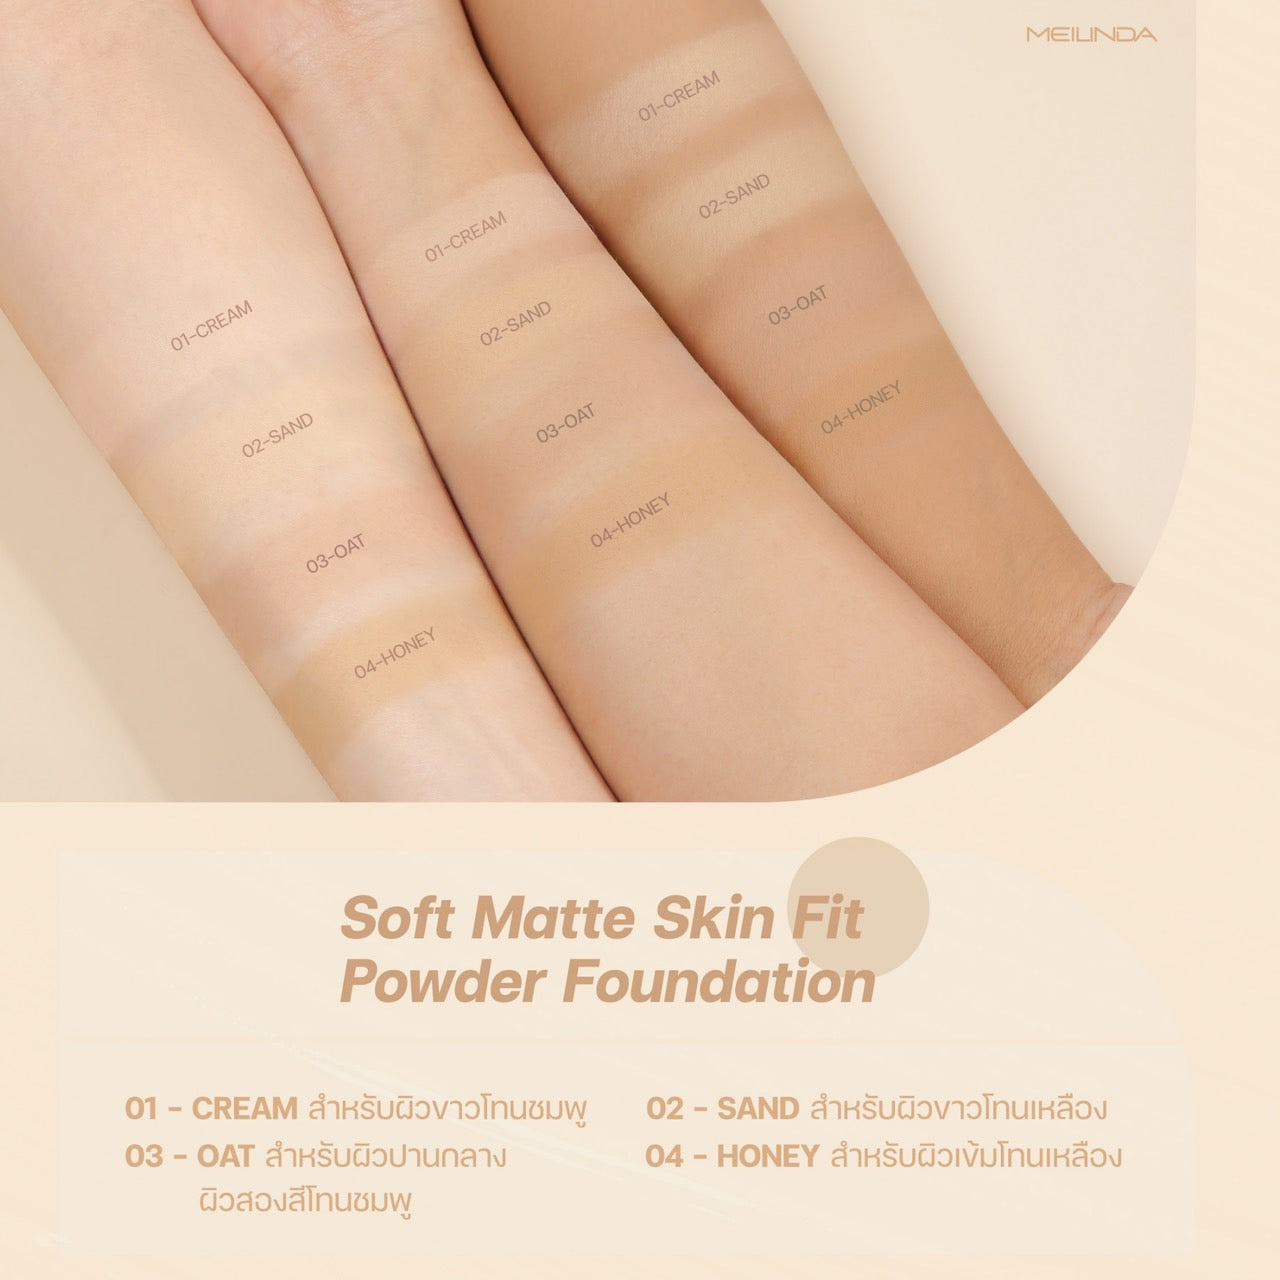 Mei Linda Soft Matte Skin Fit Powder Foundation #MC8016 : meilinda เมลินดา ซอฟต์ แมทท์ สกิน ฟิต แป้งพัฟ